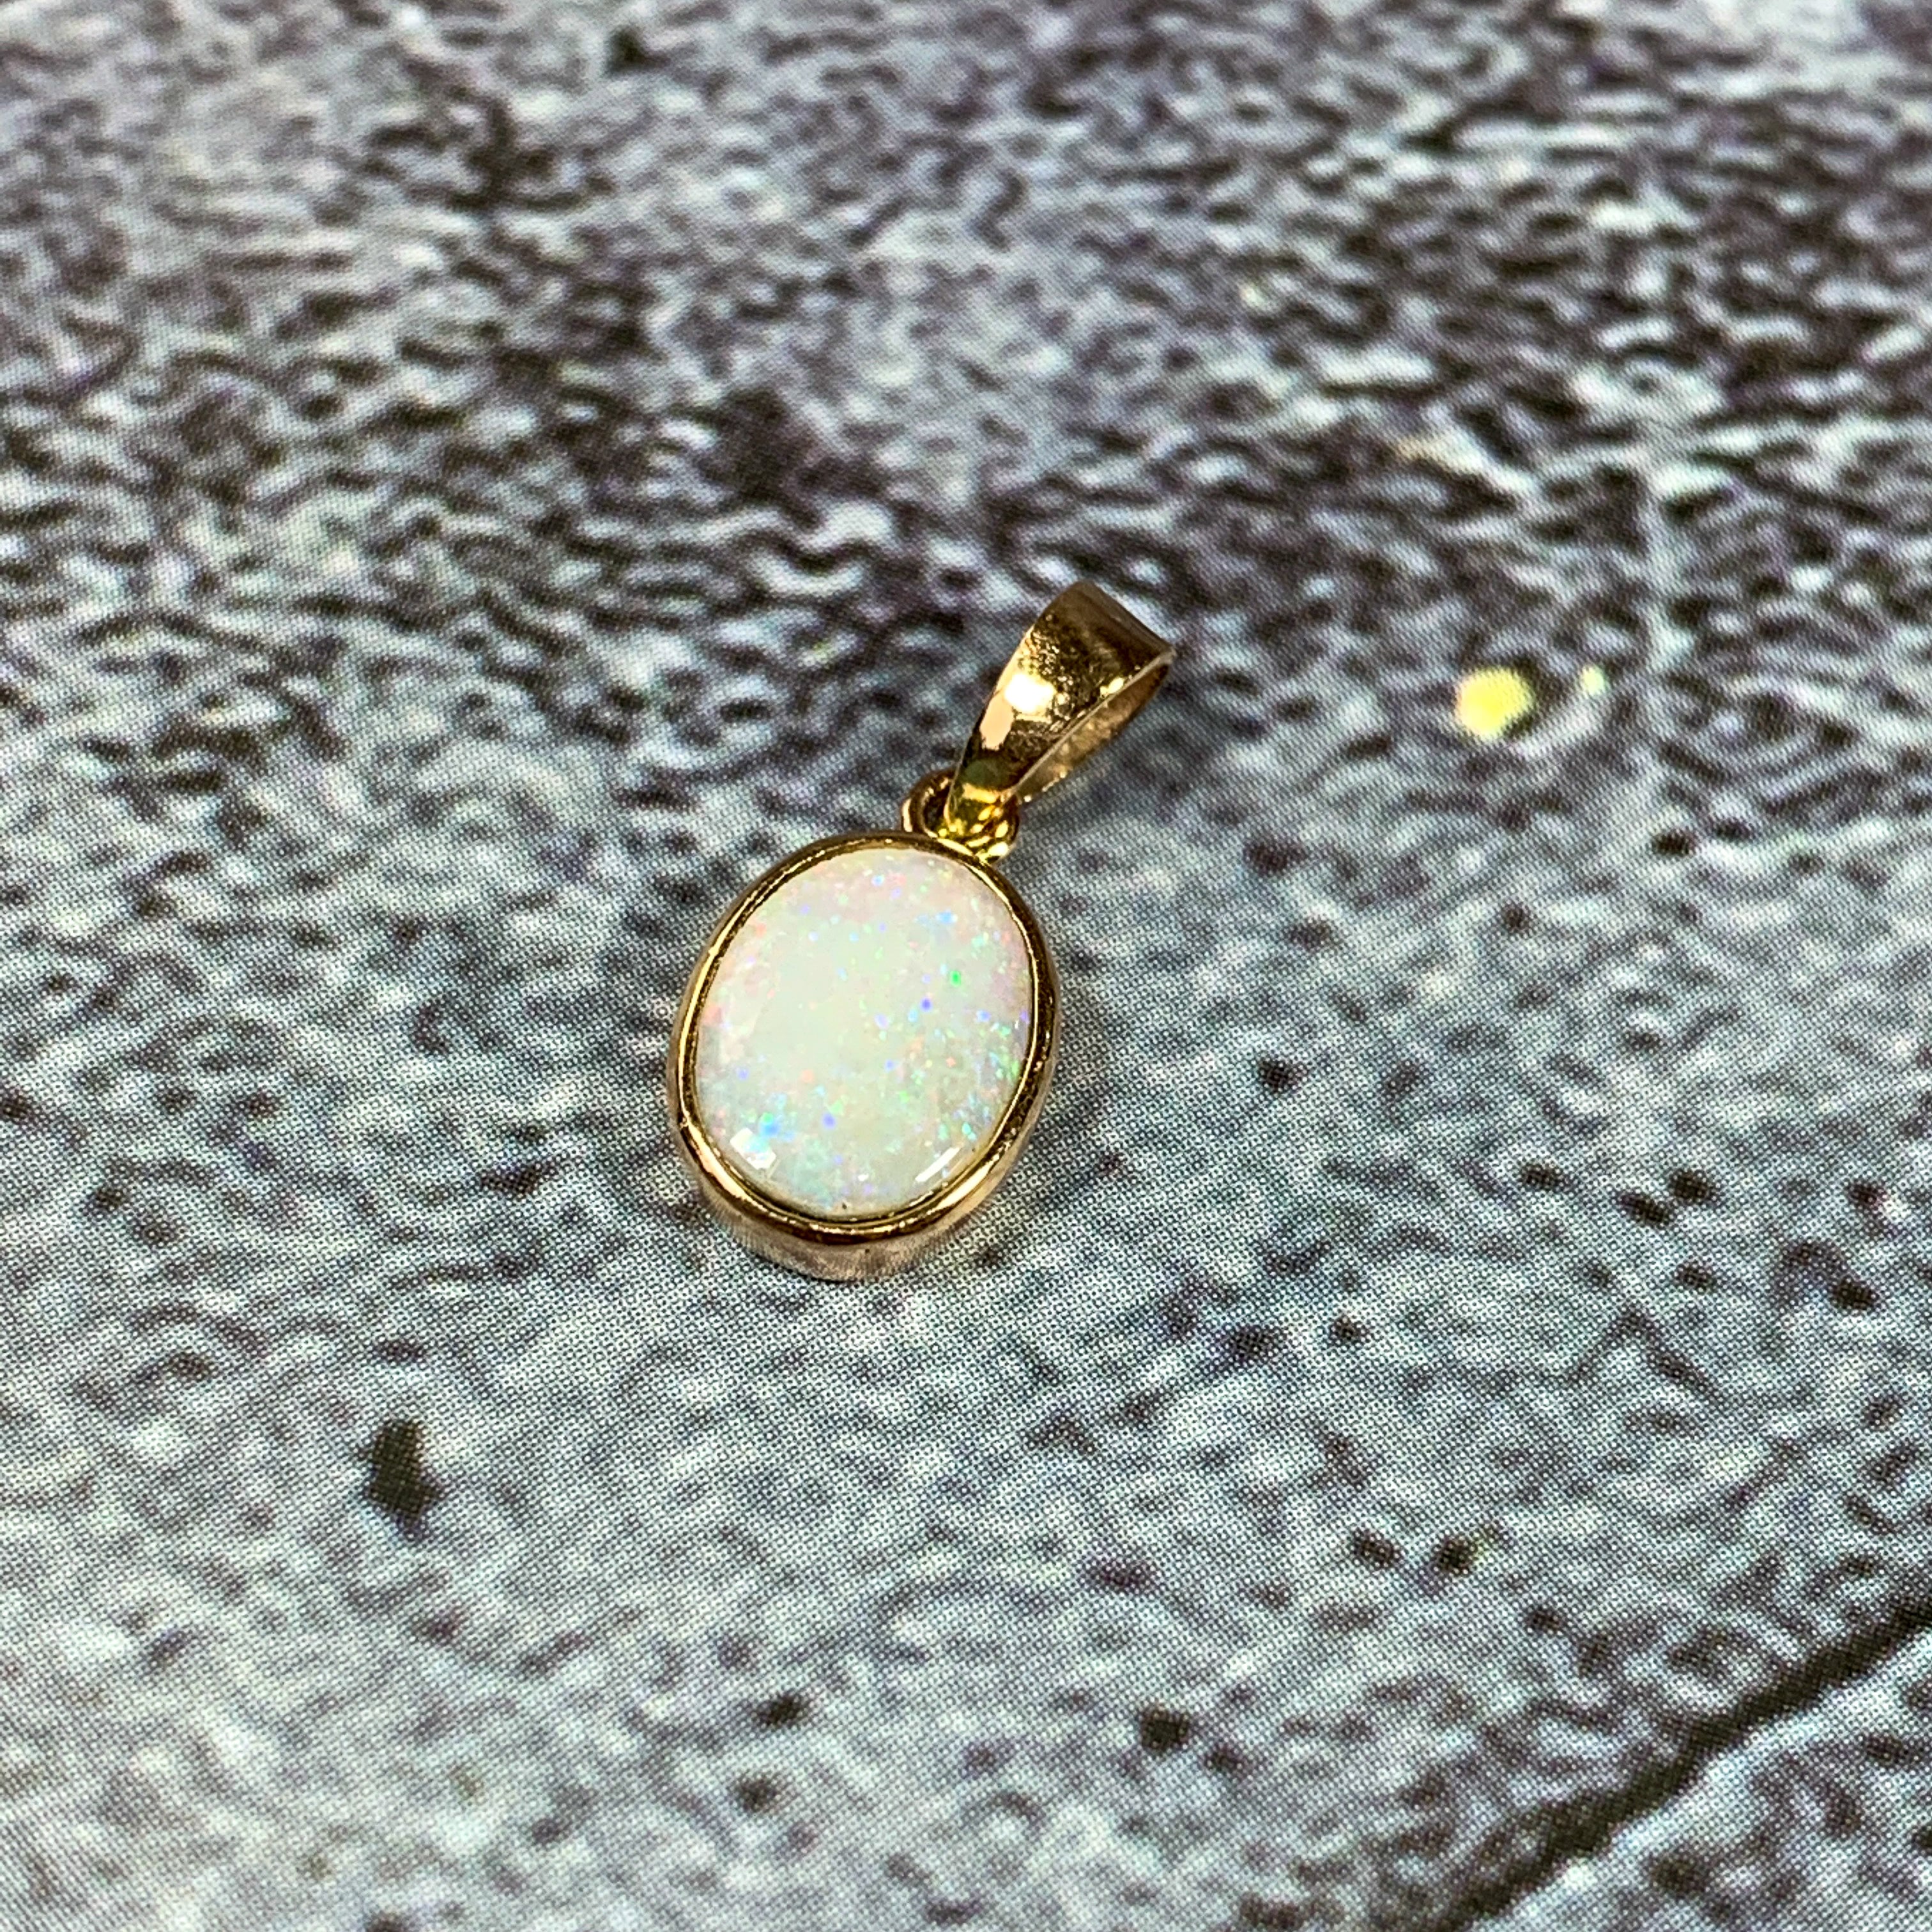 9kt Yellow Gold pendant bezel set with one 8x6mm White Opal - Masterpiece Jewellery Opal & Gems Sydney Australia | Online Shop